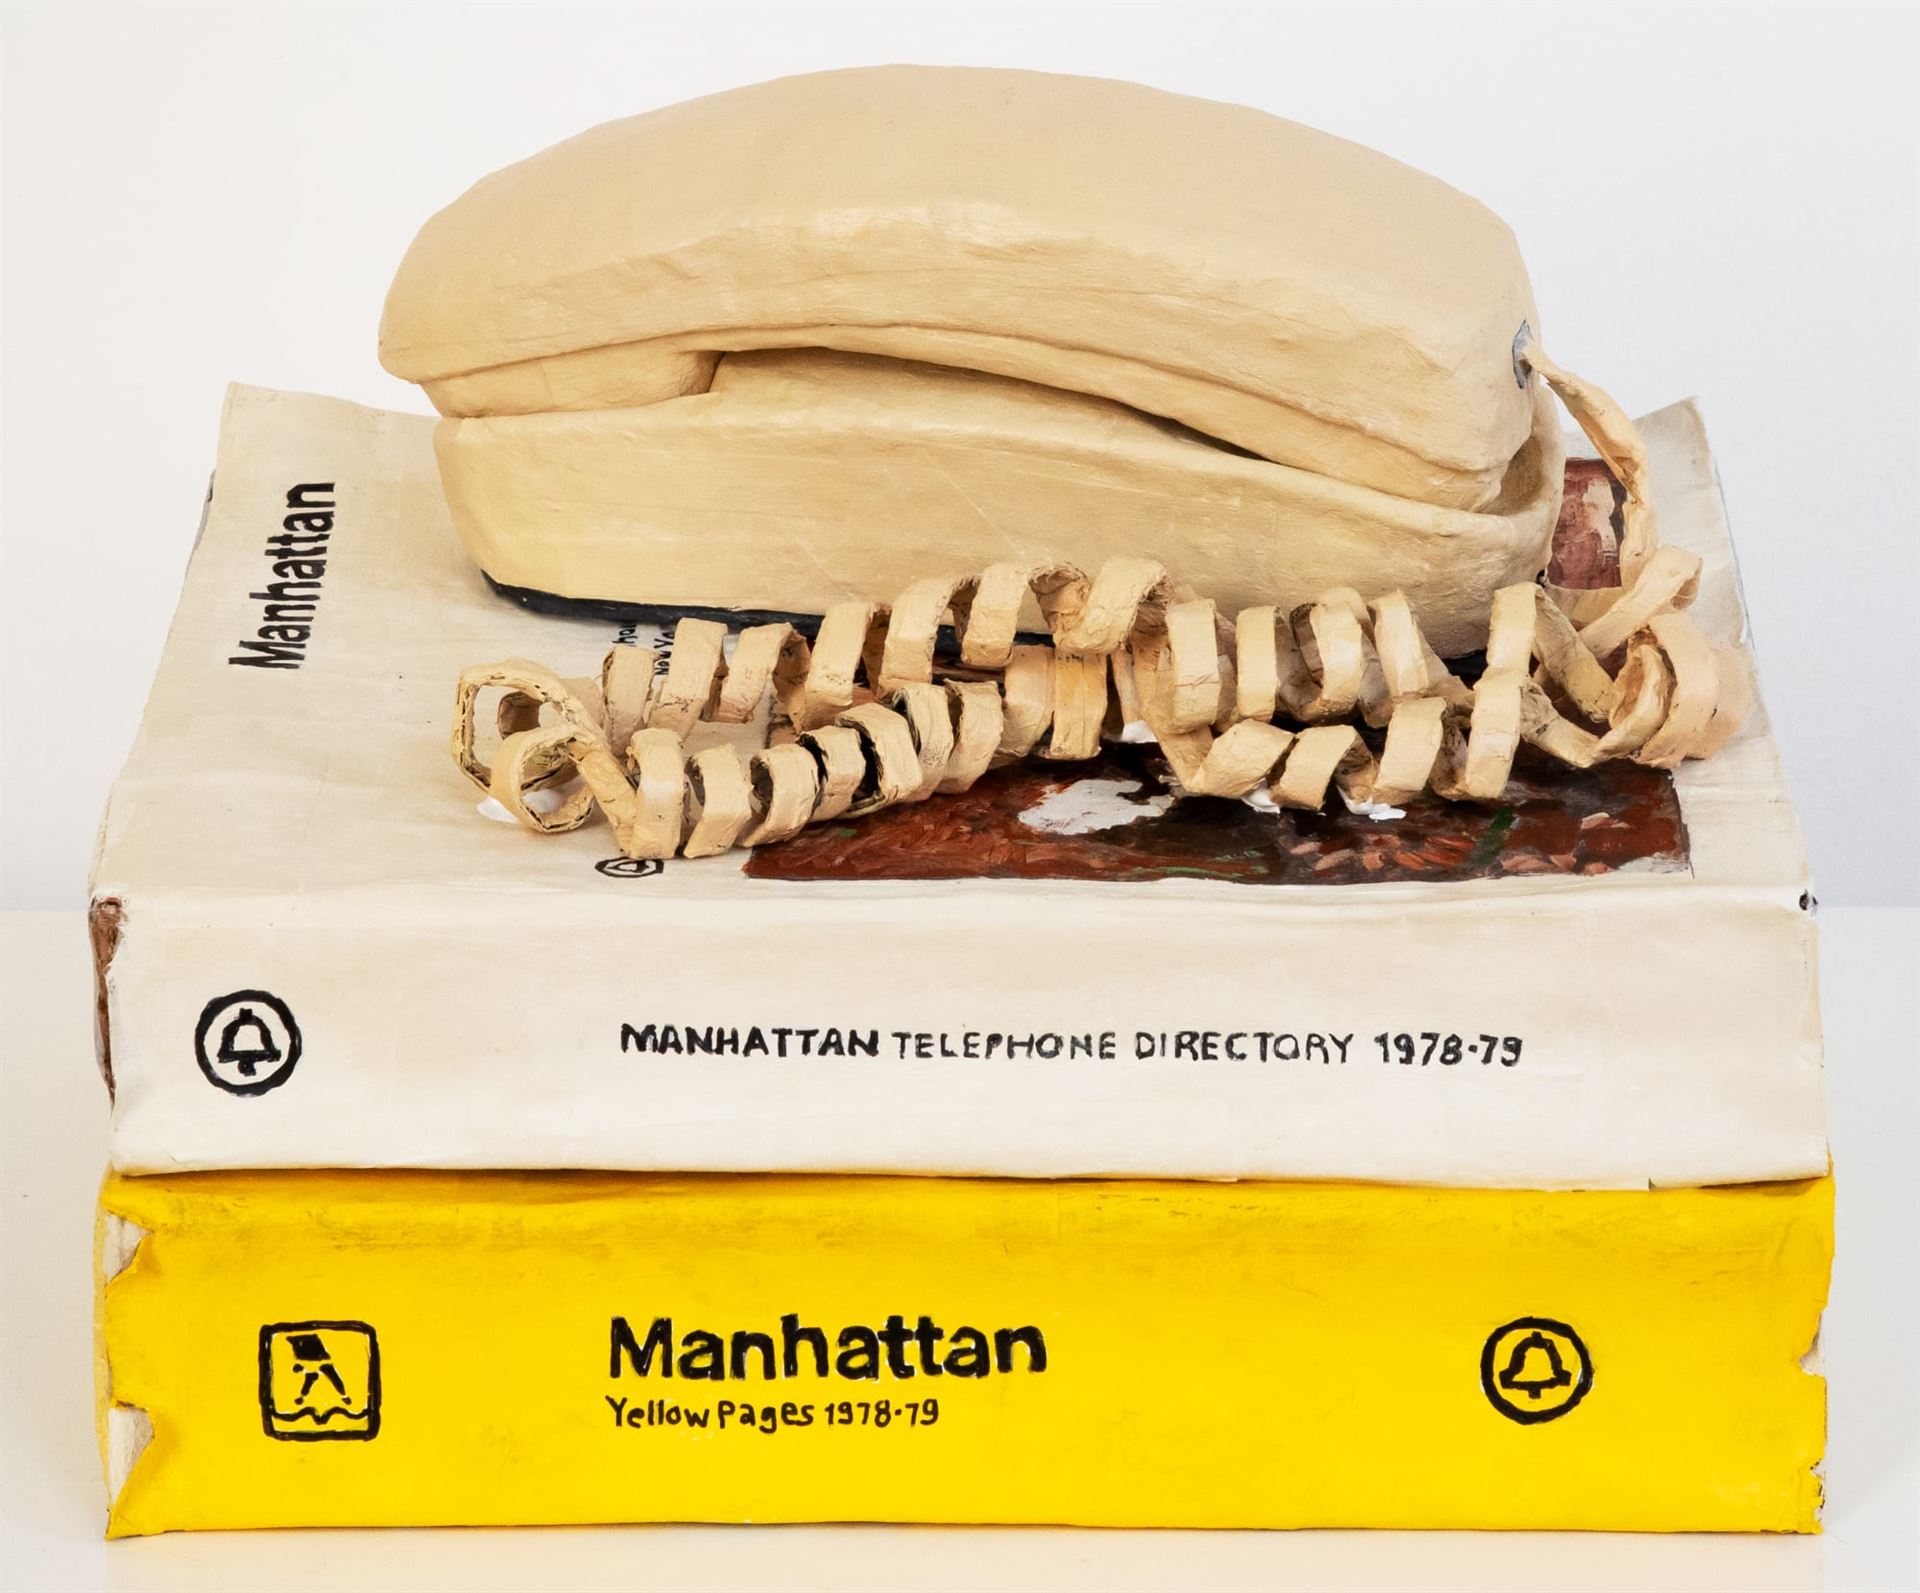 A photo of paper mache phone books and a phone